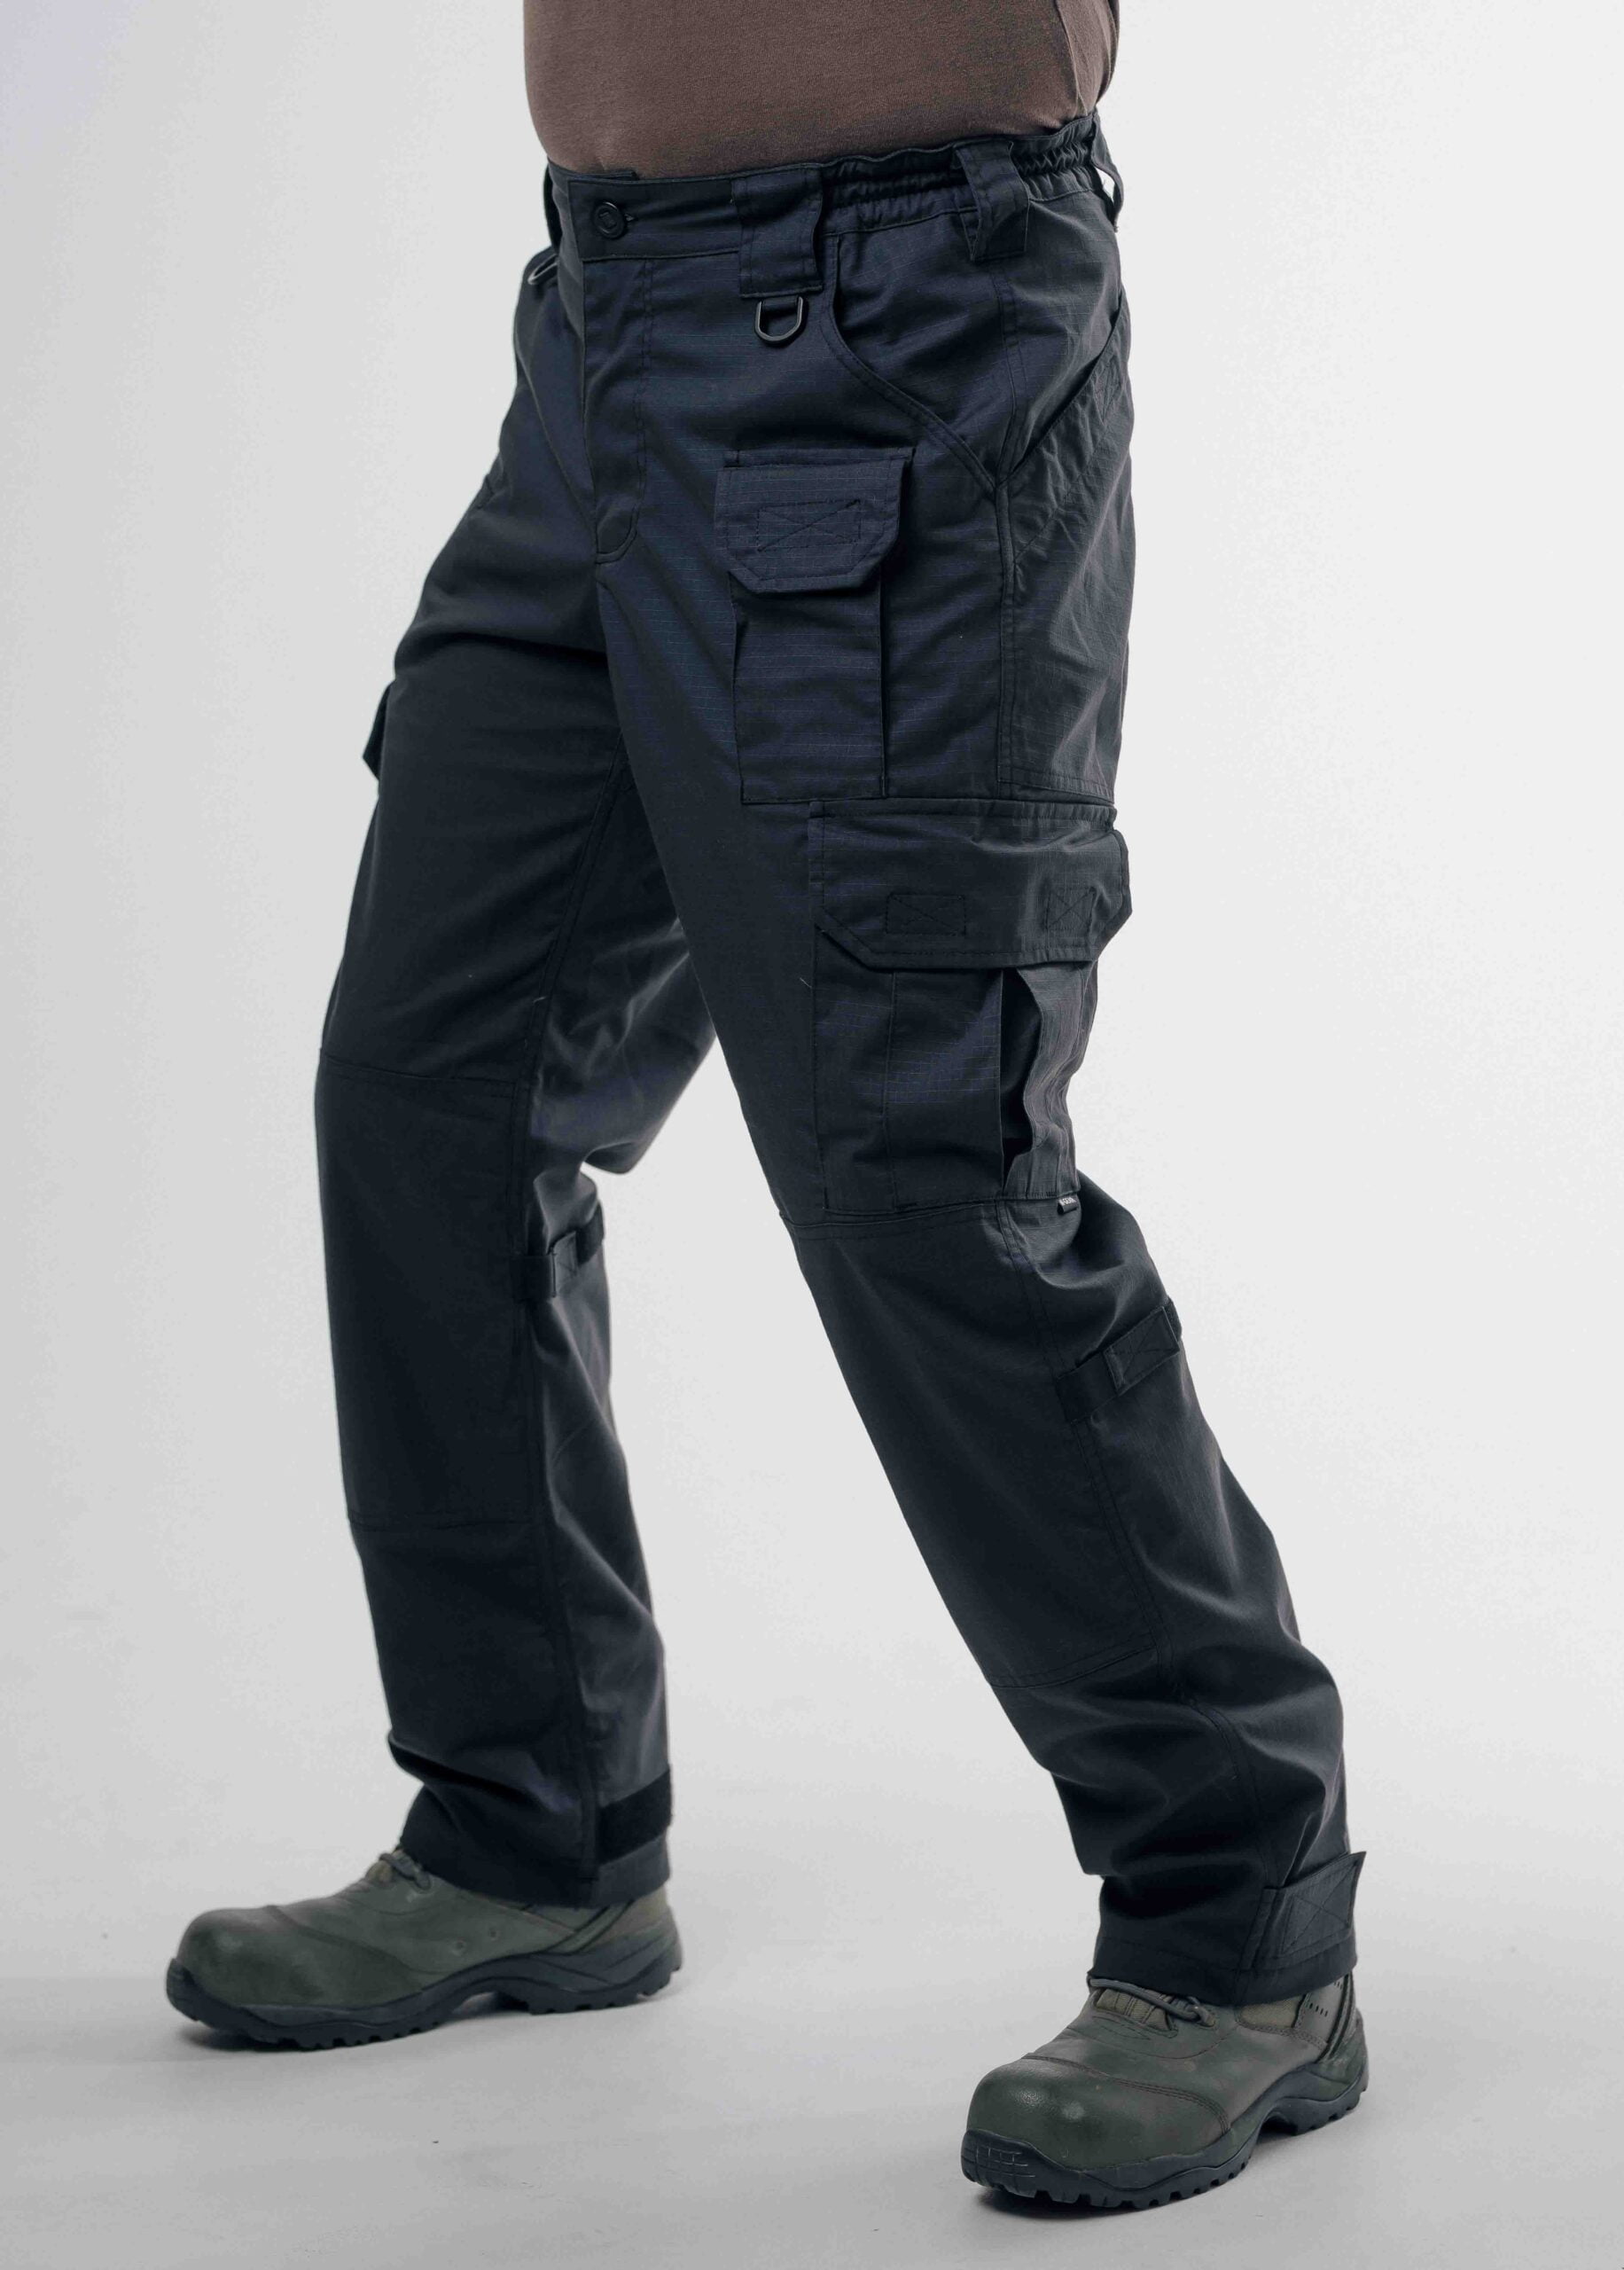 Dark Navy Blue Tactical Uniform Pants Law Enforcement Police Security NYPD  Spec